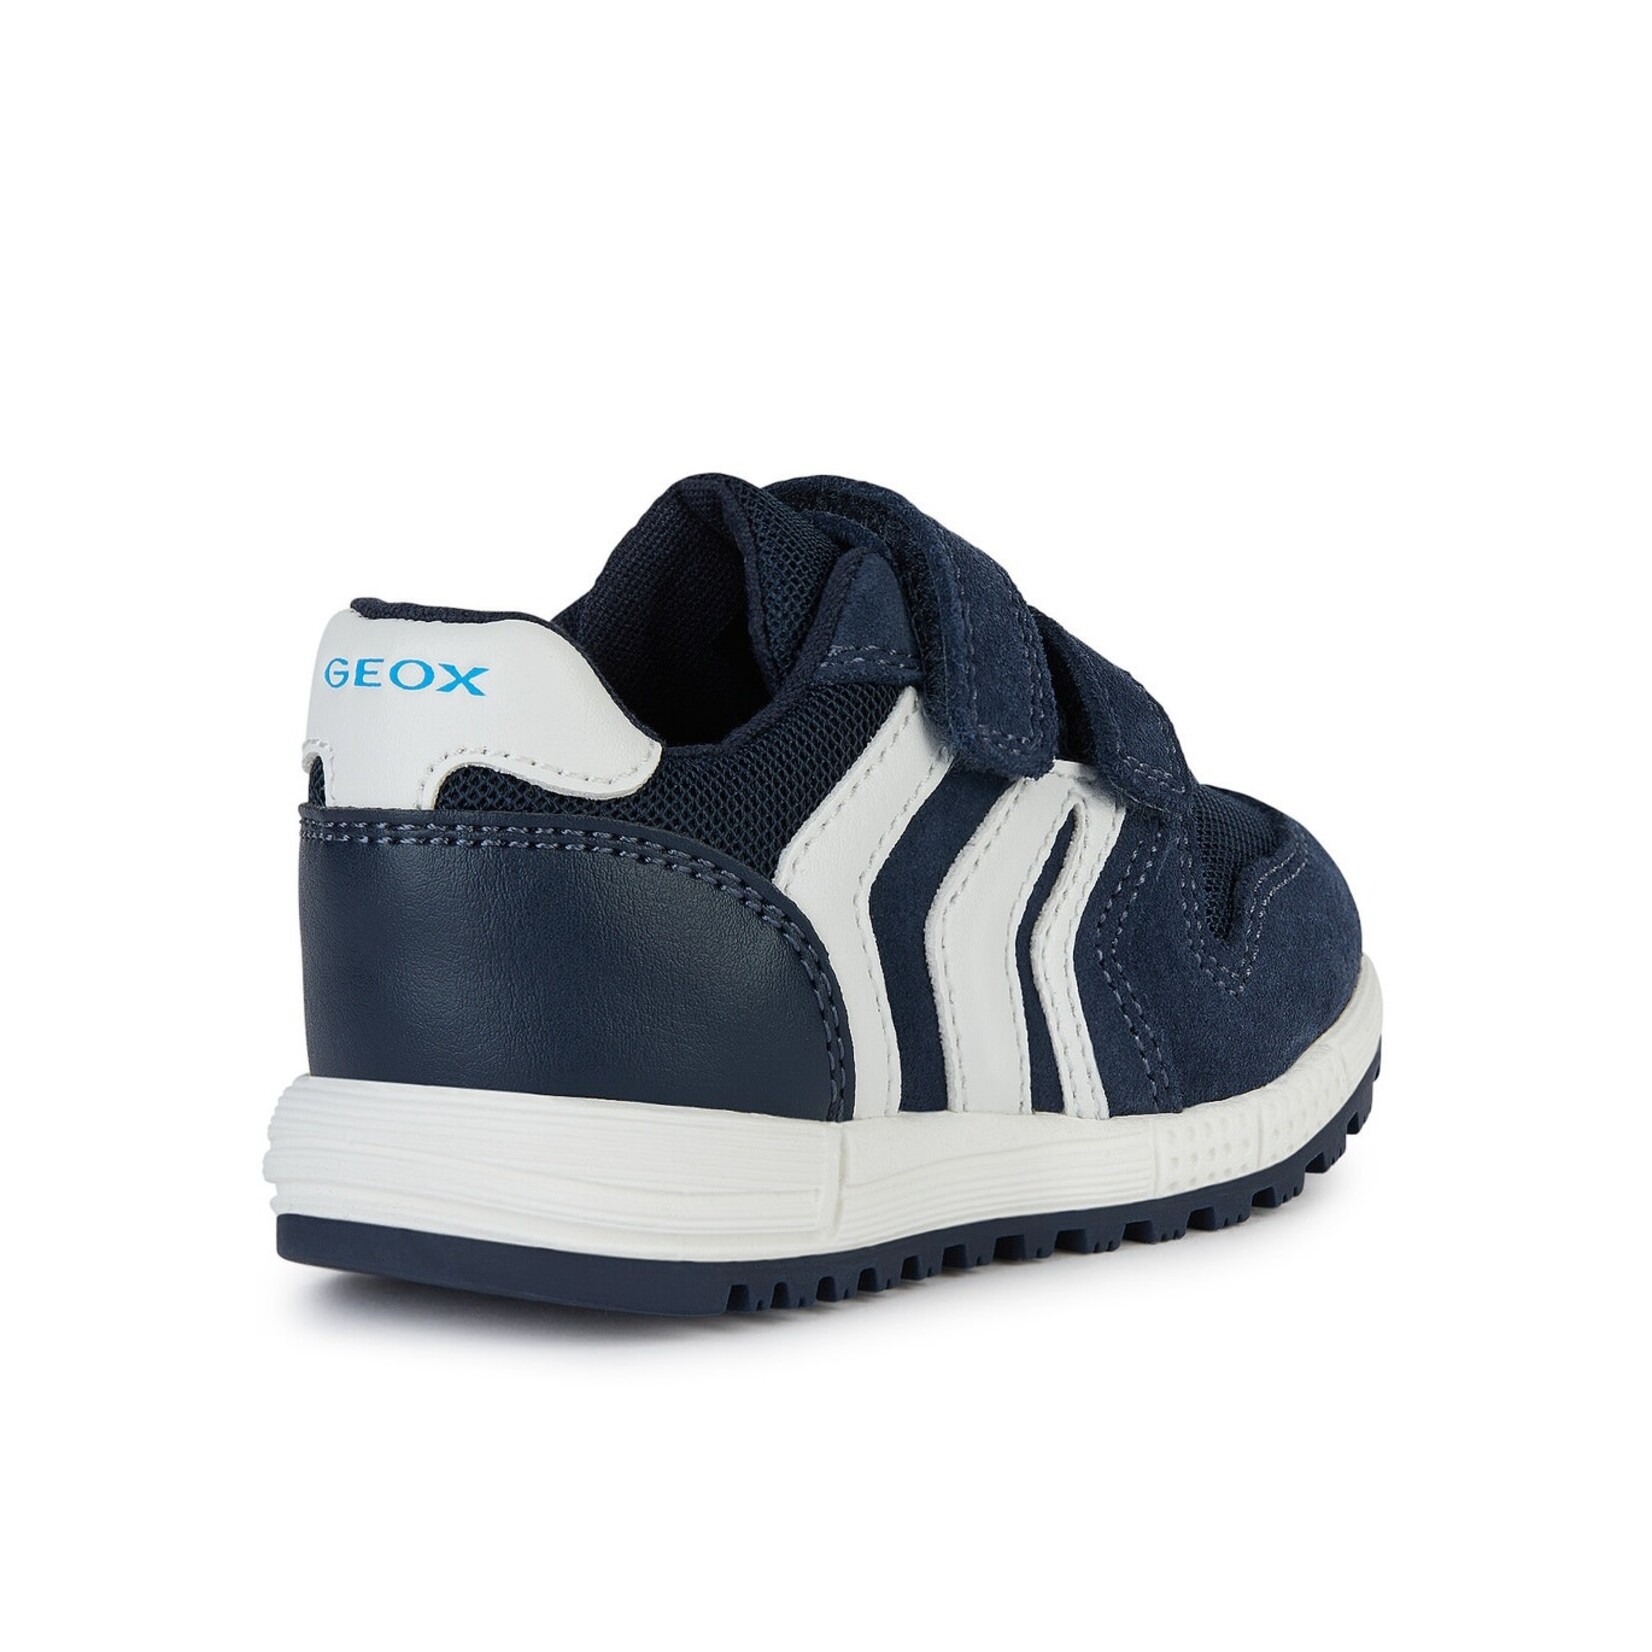 Geox GEOX - Chaussures de sport 'Alben - Suede Mesh - bleu marine et blanc'